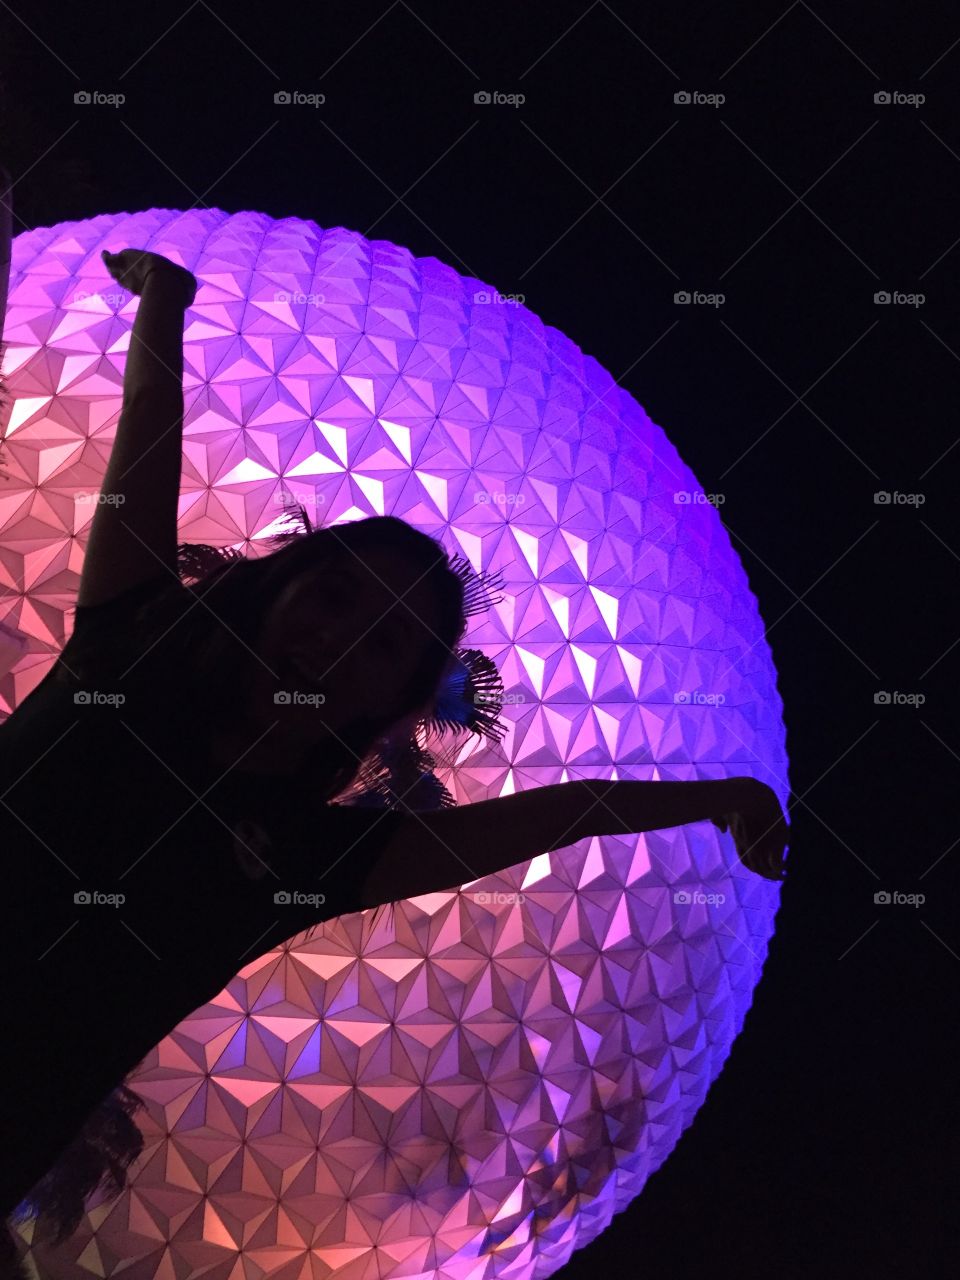 Black silhouette in front of the Epcot Globe in Orlando, FL. 